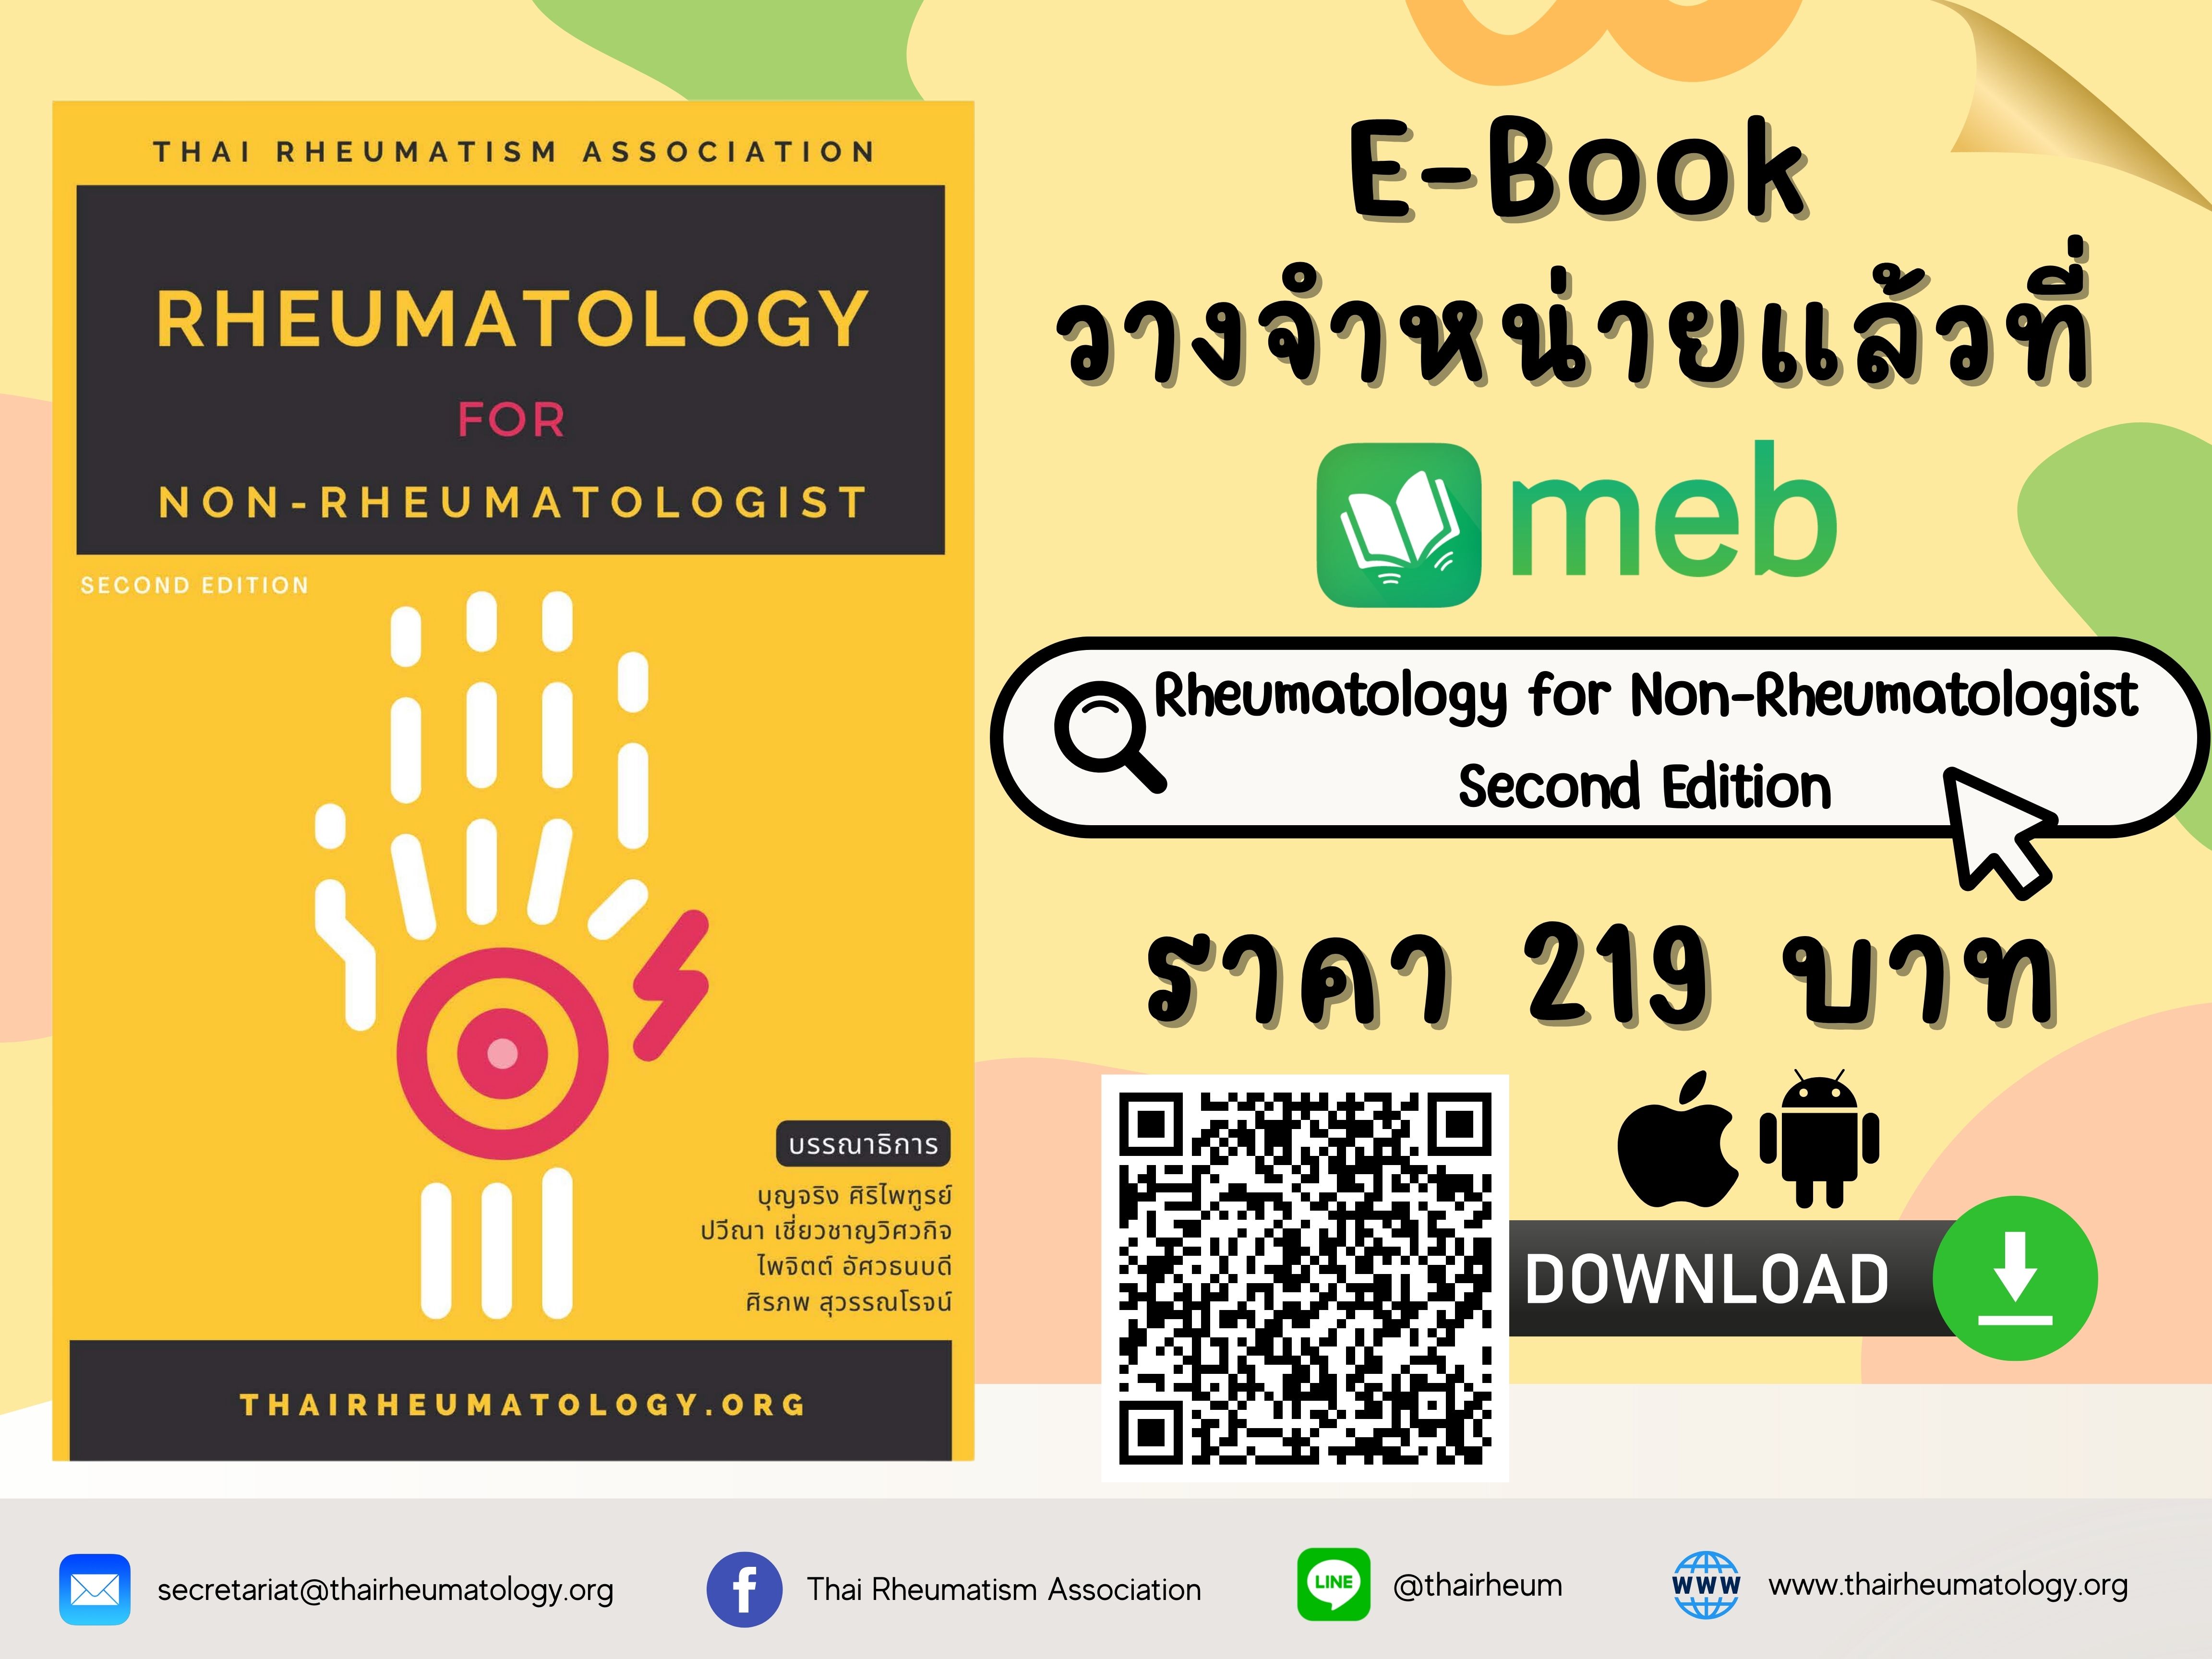 E-Book Rheumatology for Non-Rheumatologist Second Edition